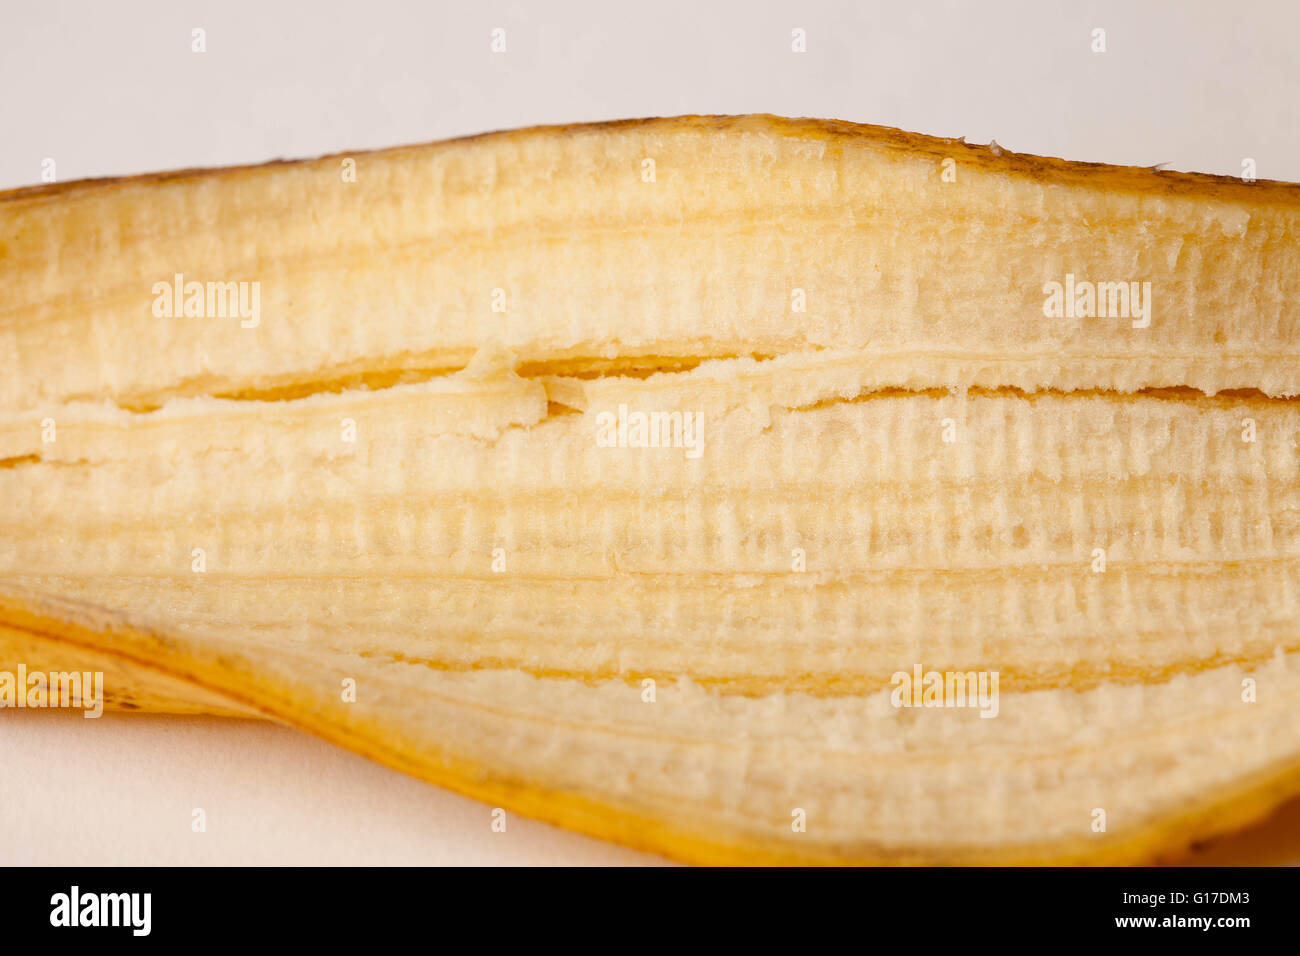 Banana skin Stock Photo